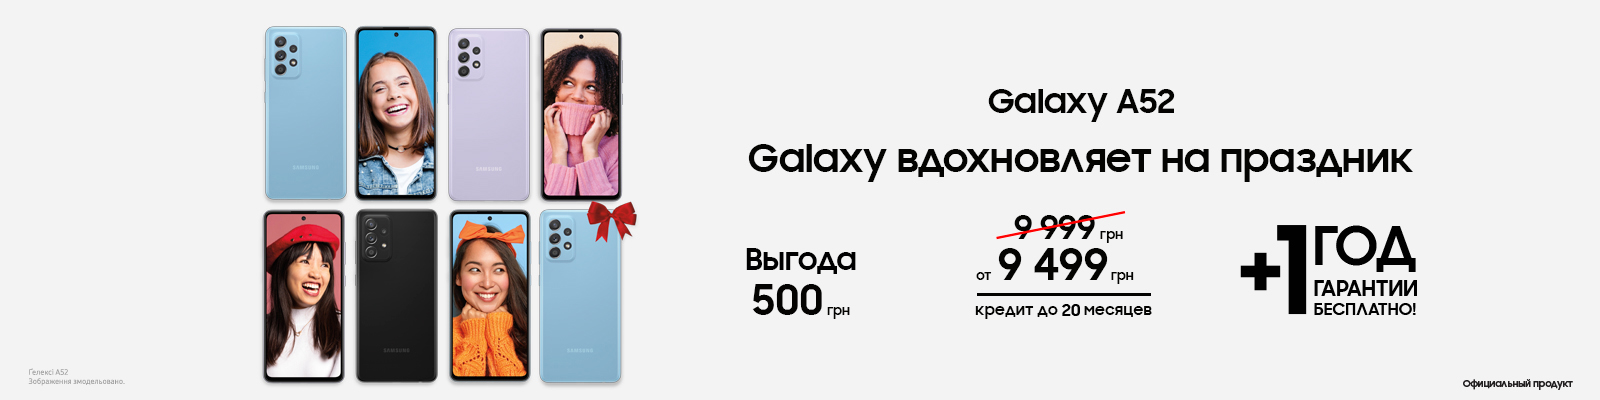 Galaxy A52 вдохновляет на праздник